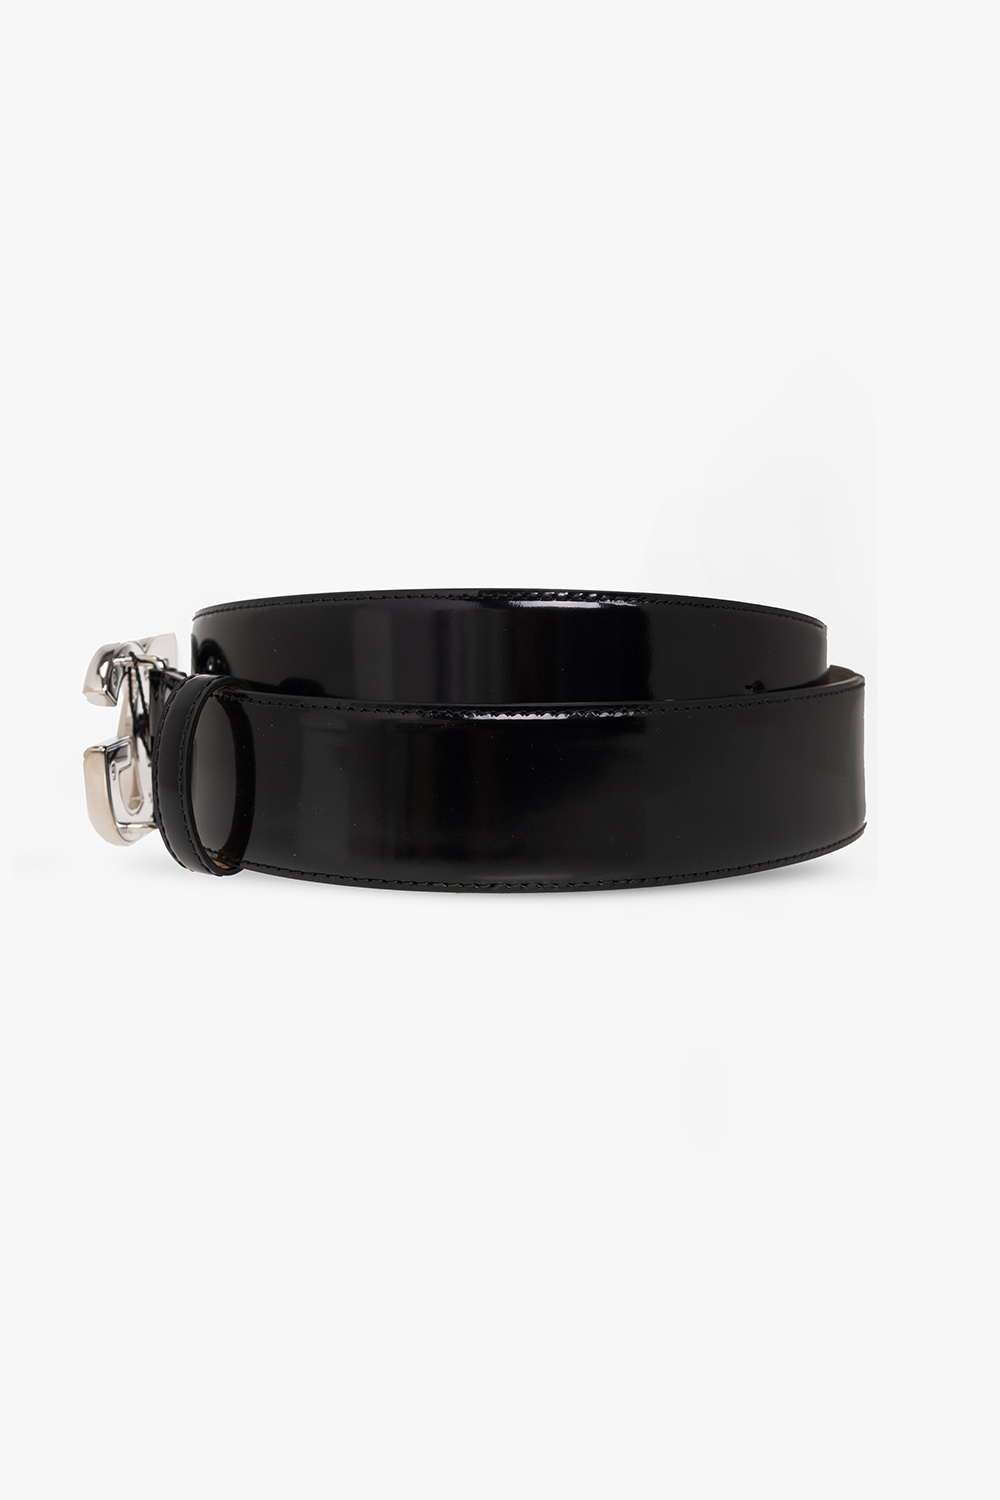 Dolce & Gabbana short-sleeved pyjama top Patent leather belt with logo